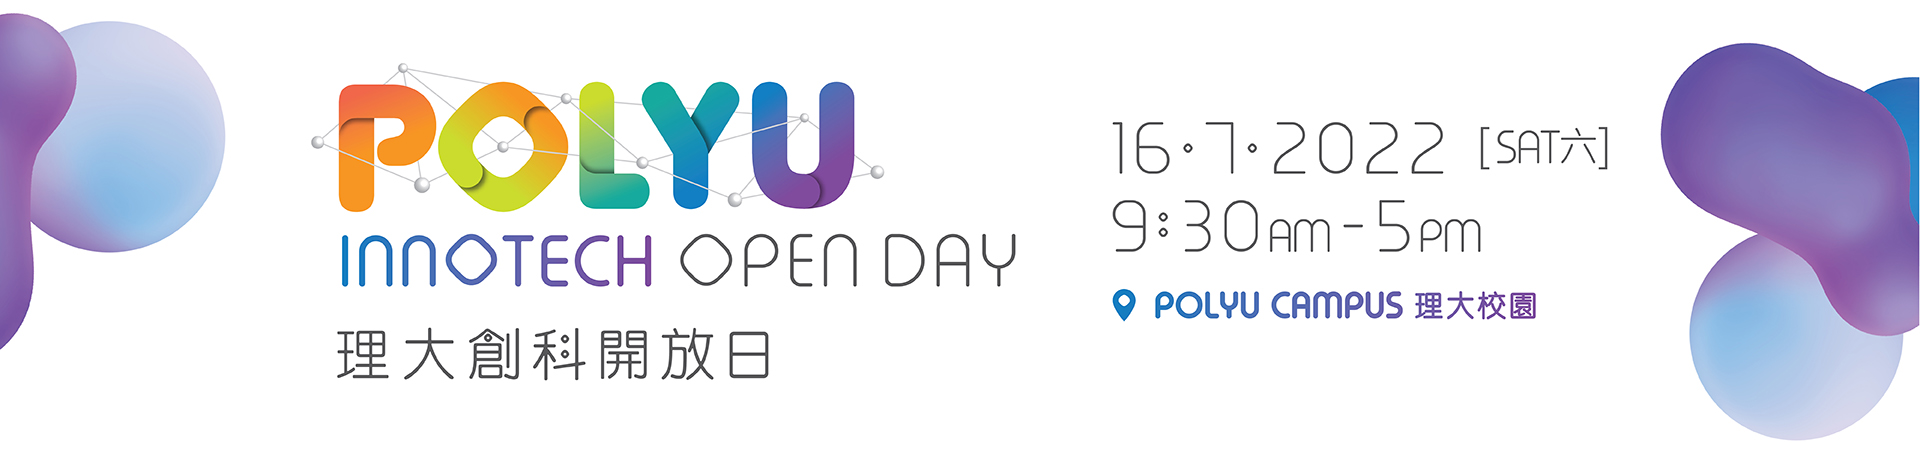 PolyU InnoTech Open Day 16 July 2022 9:30am-5pm